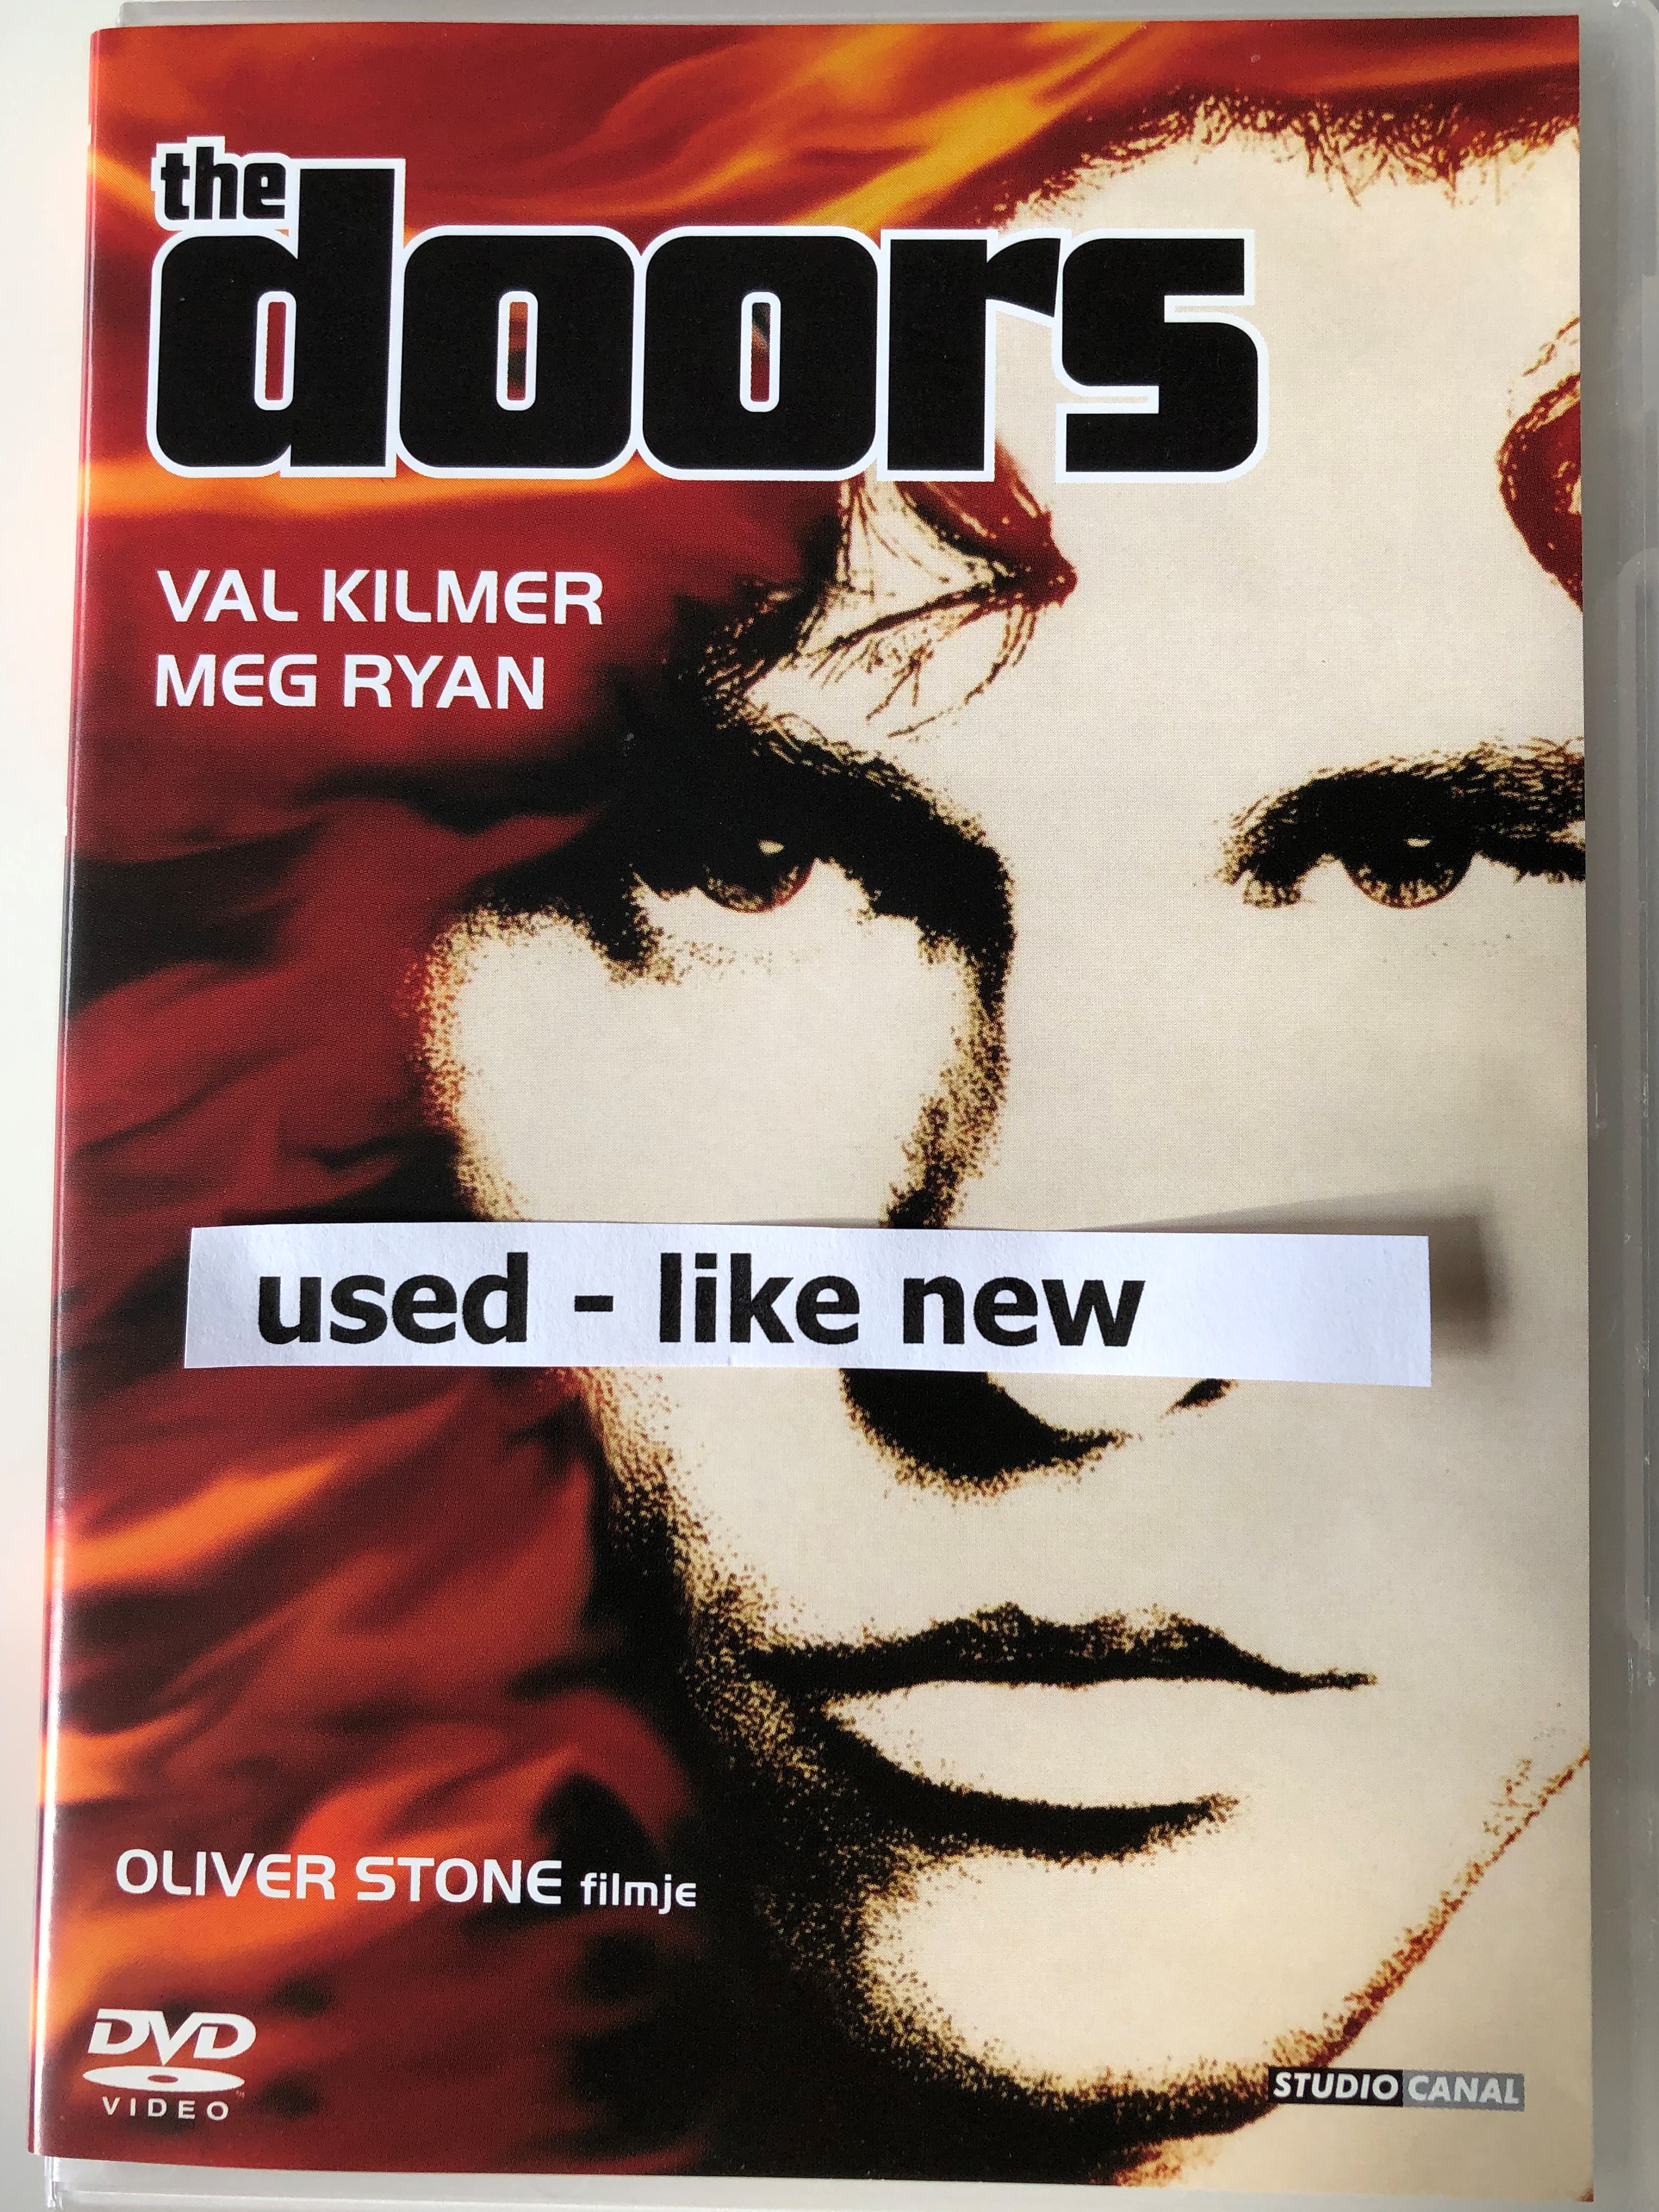 The Doors 1991 Dvd Directed By Oliver Stone Starring Val Kilmer Meg Ryan Biographical 